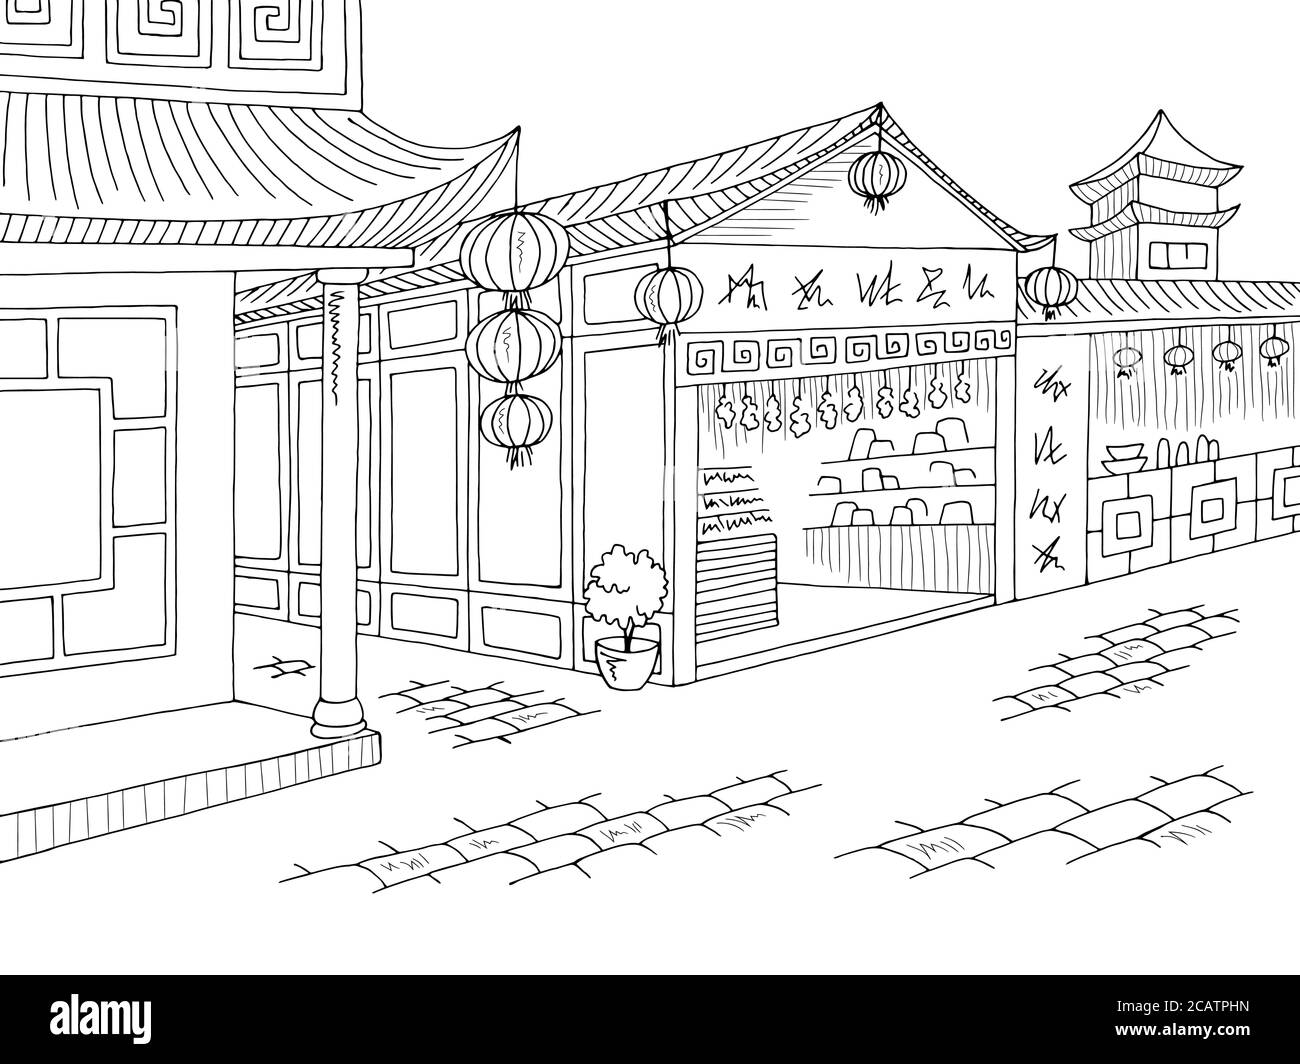 Asien alte Straße Grafik schwarz weiß Stadt Landschaft Skizze Illustration Vektor Stock Vektor